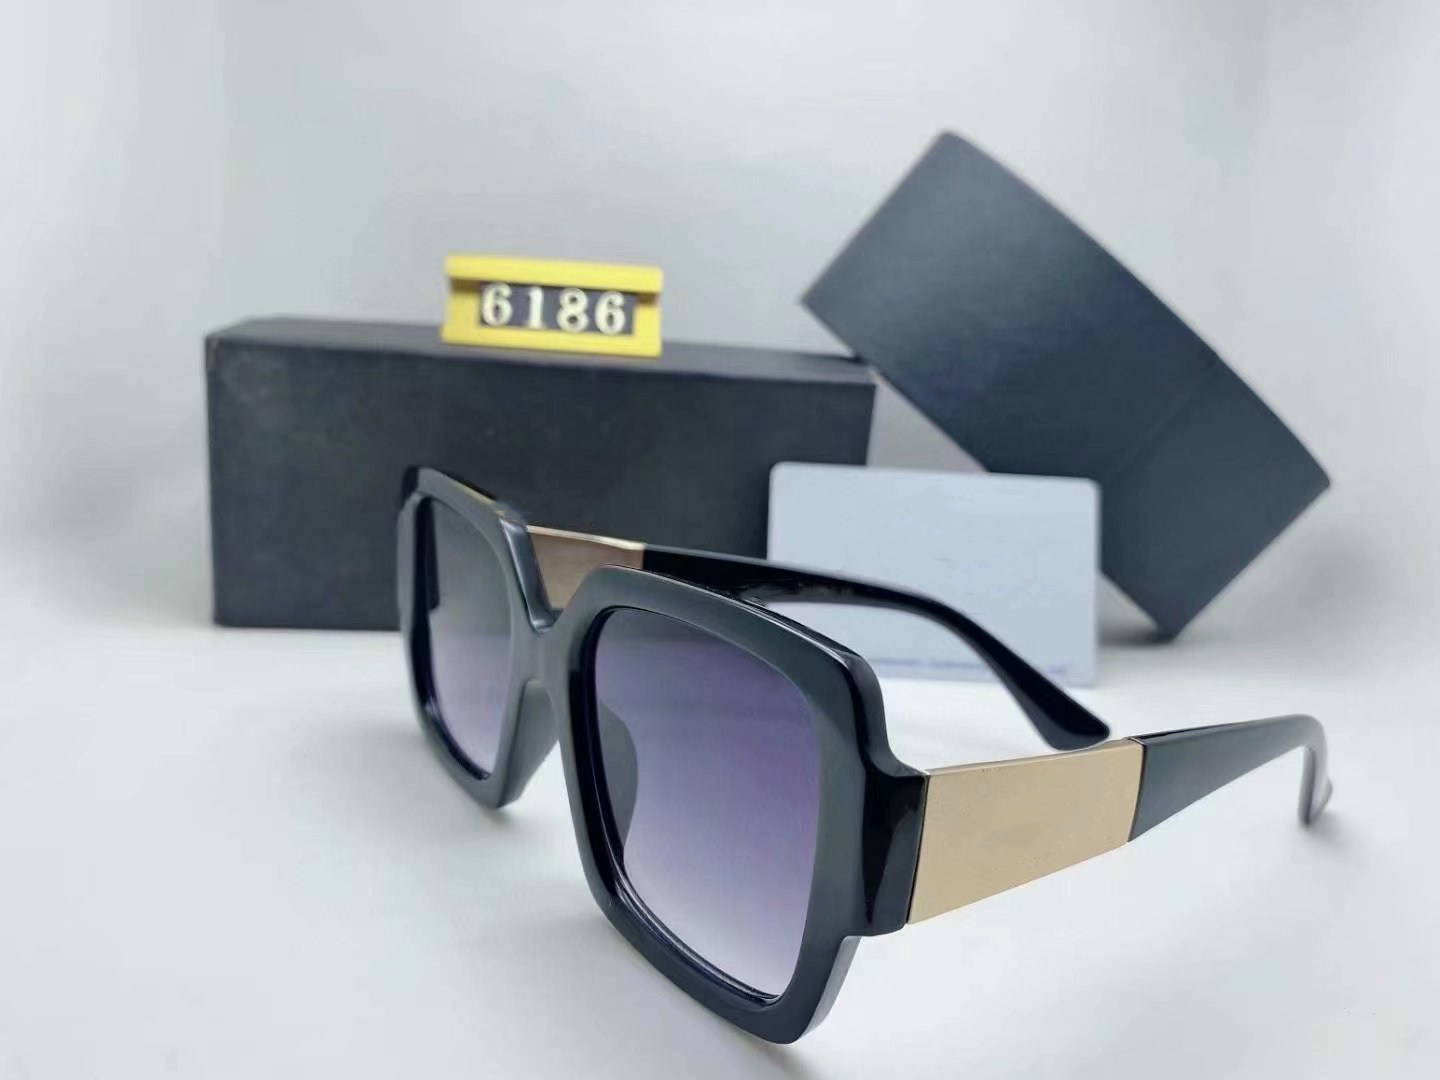 

2021 Fashion Designer Sunglasses Highest Quality Men & Women Polarized UV400 Lenses Leather Box Cloth Manual Accessories, Everything! 6186